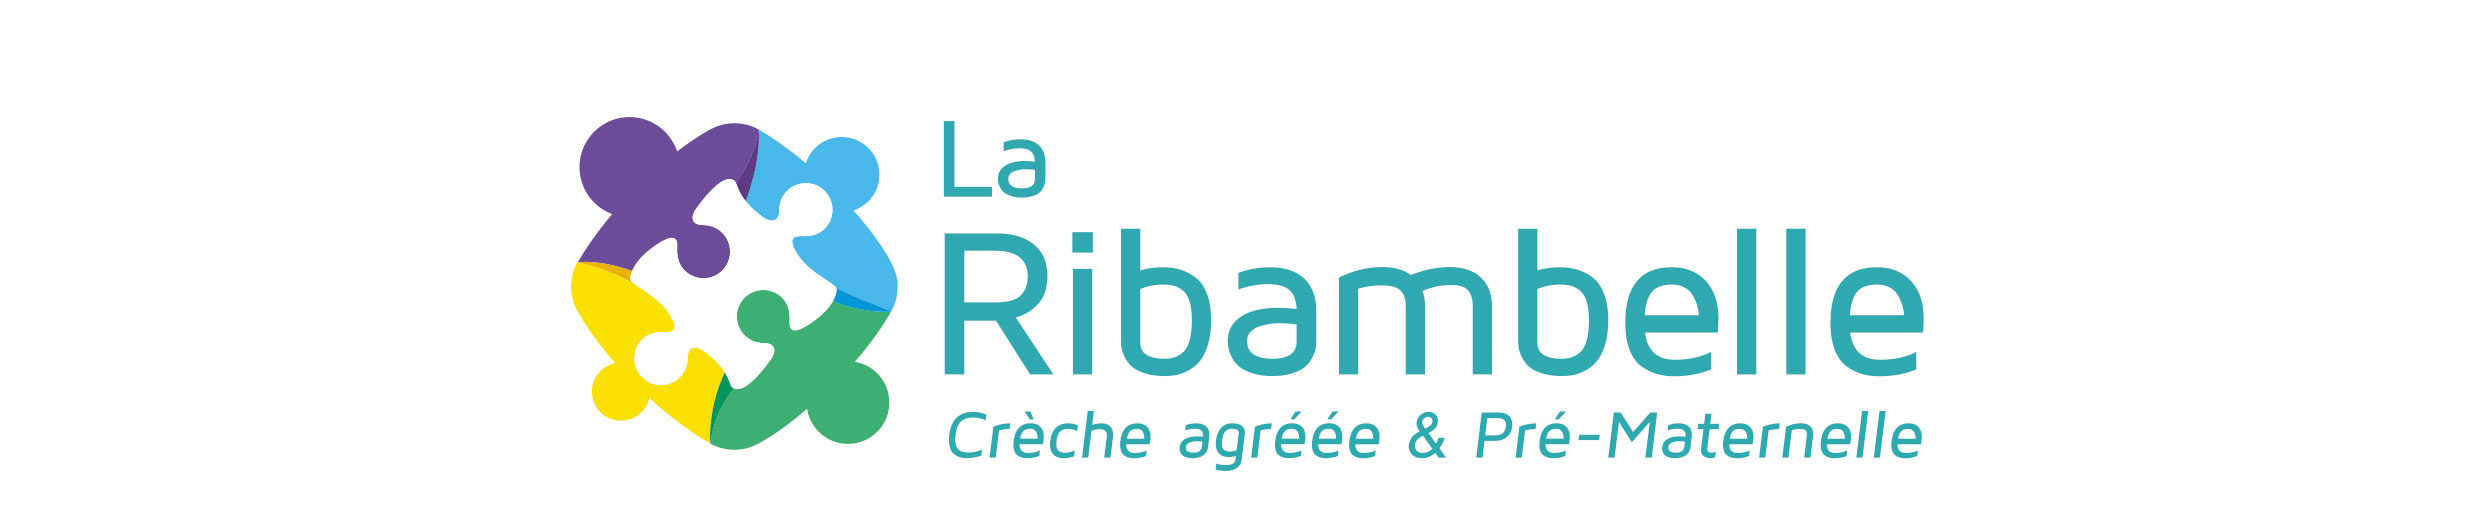 logo de La Ribambelle